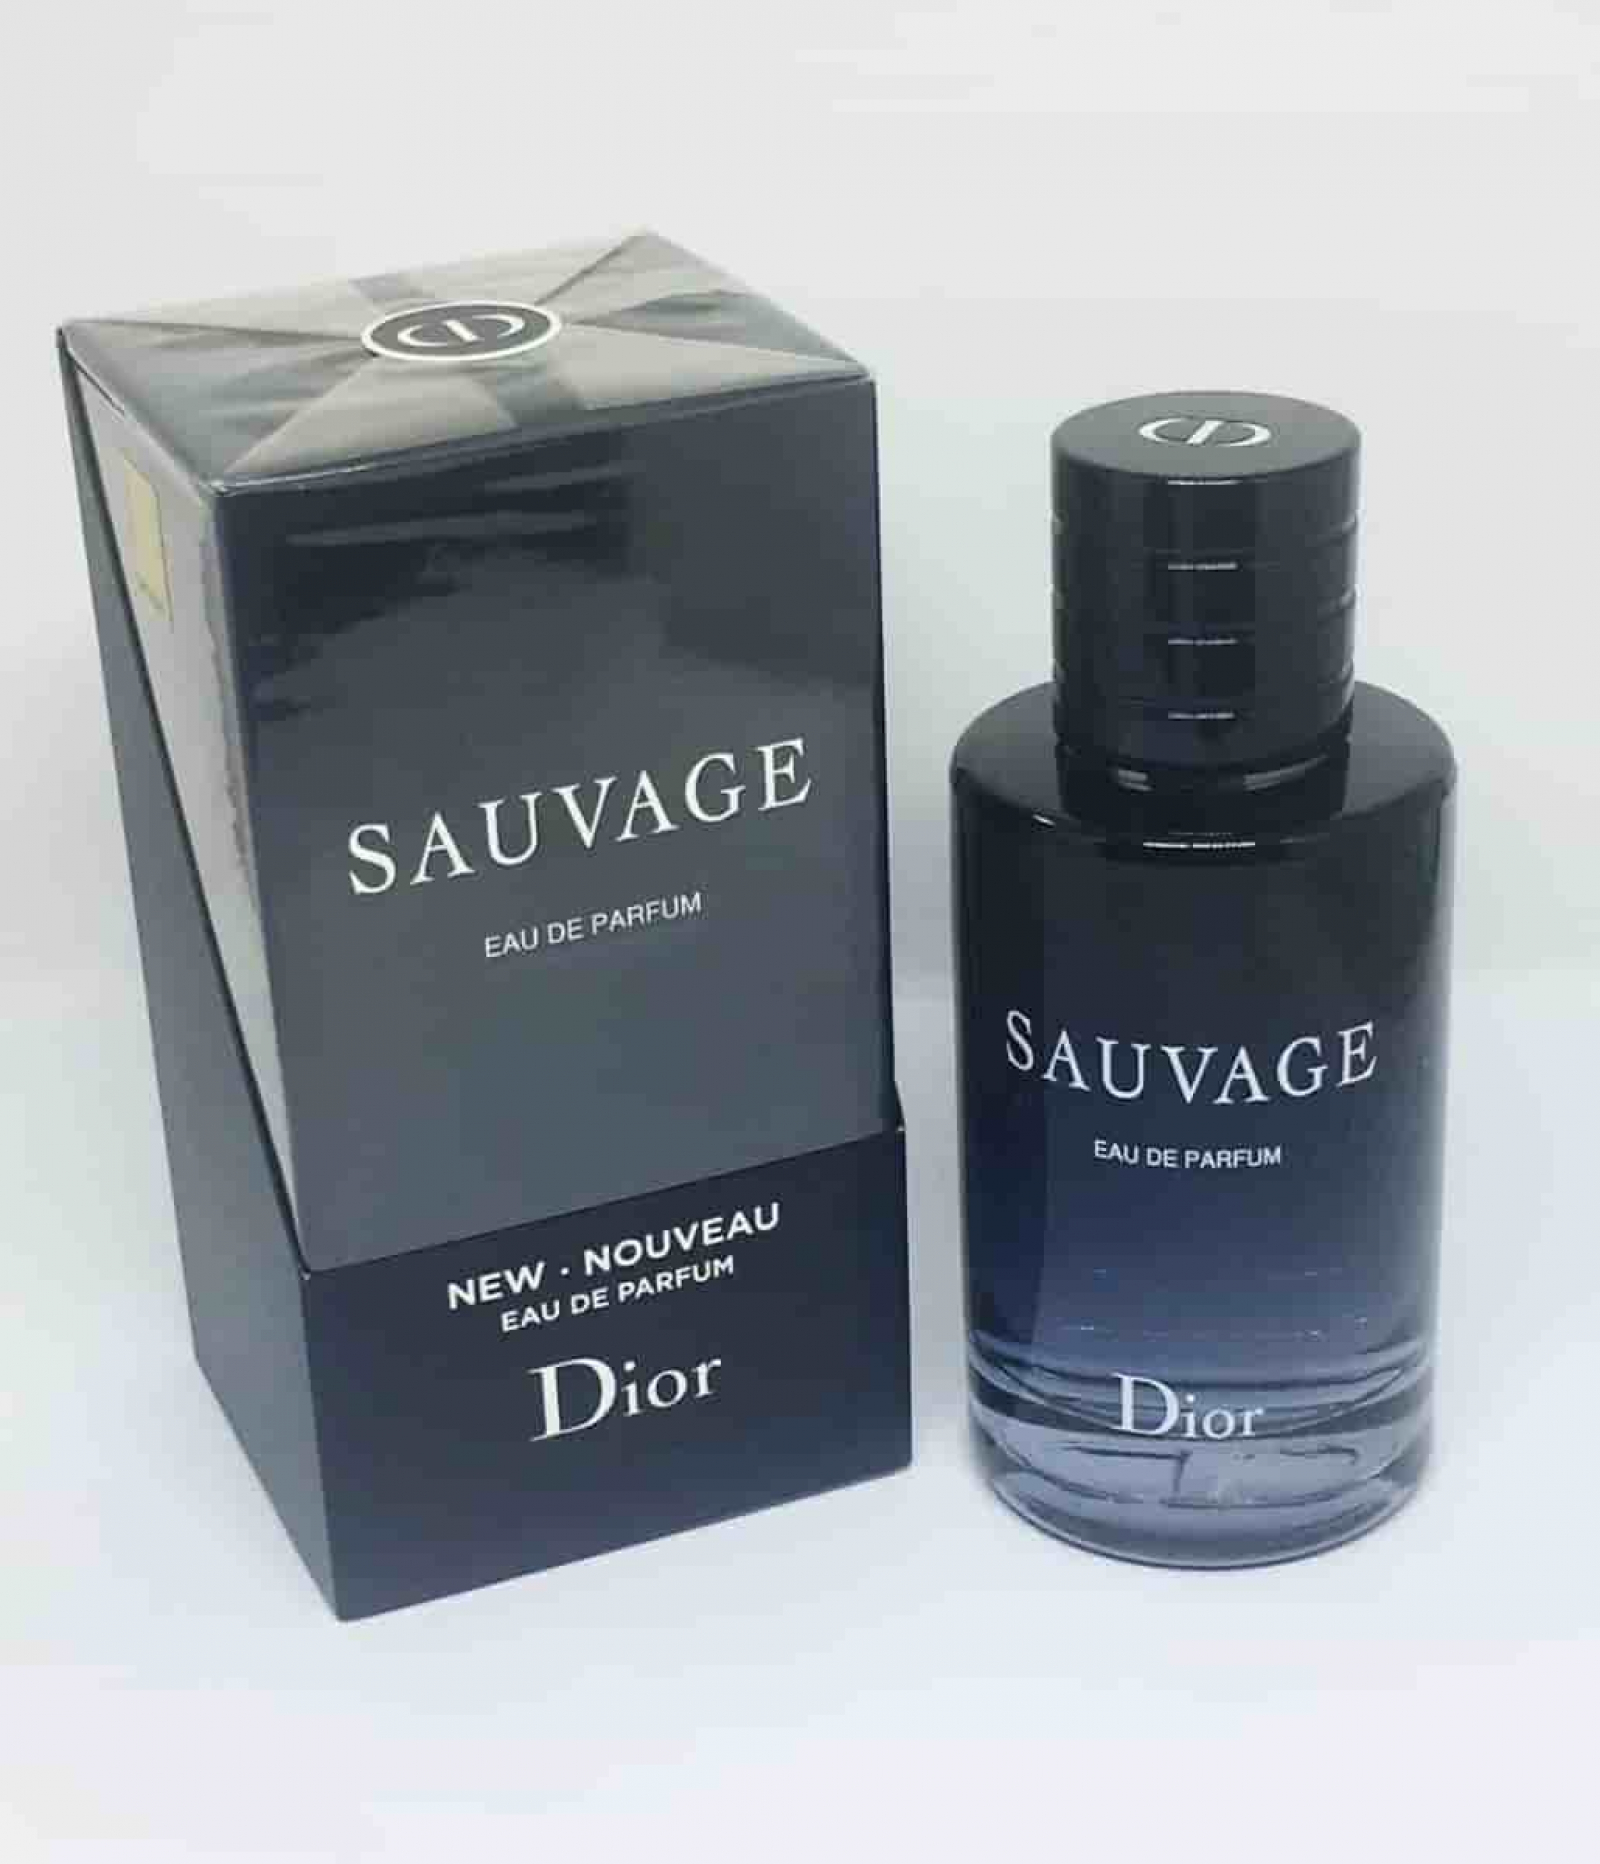 Amazoncom  Christian Dior Sauvage Eau De Toilette Spray for Men 34  Fluid Ounce  Beauty  Personal Care